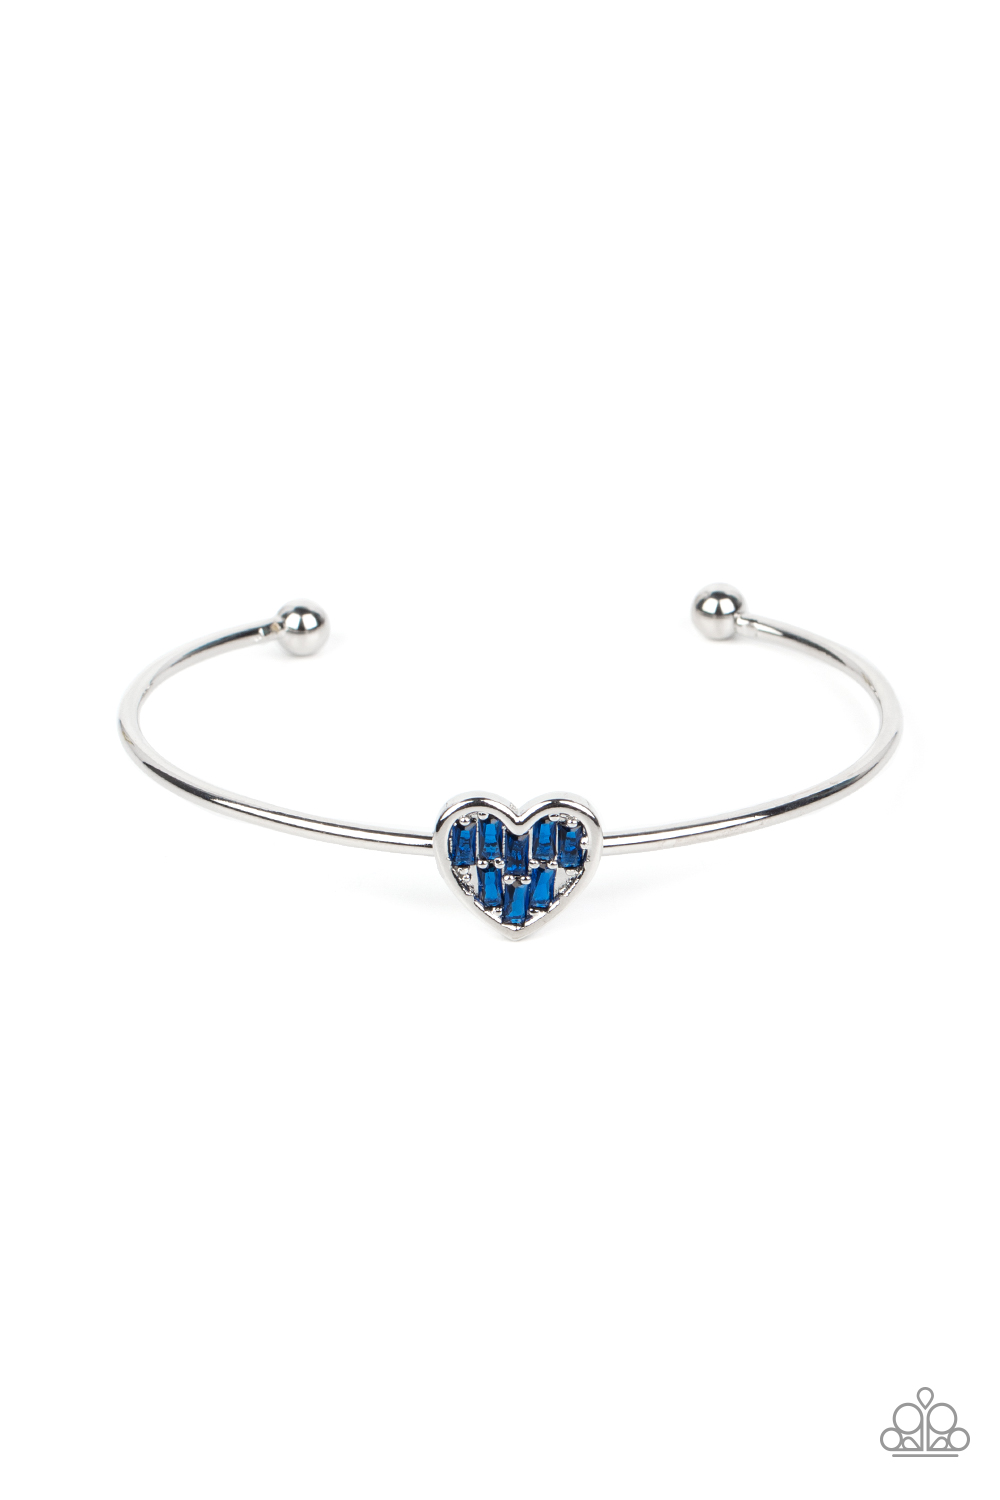 Bracelet - Heart of Ice - Blue